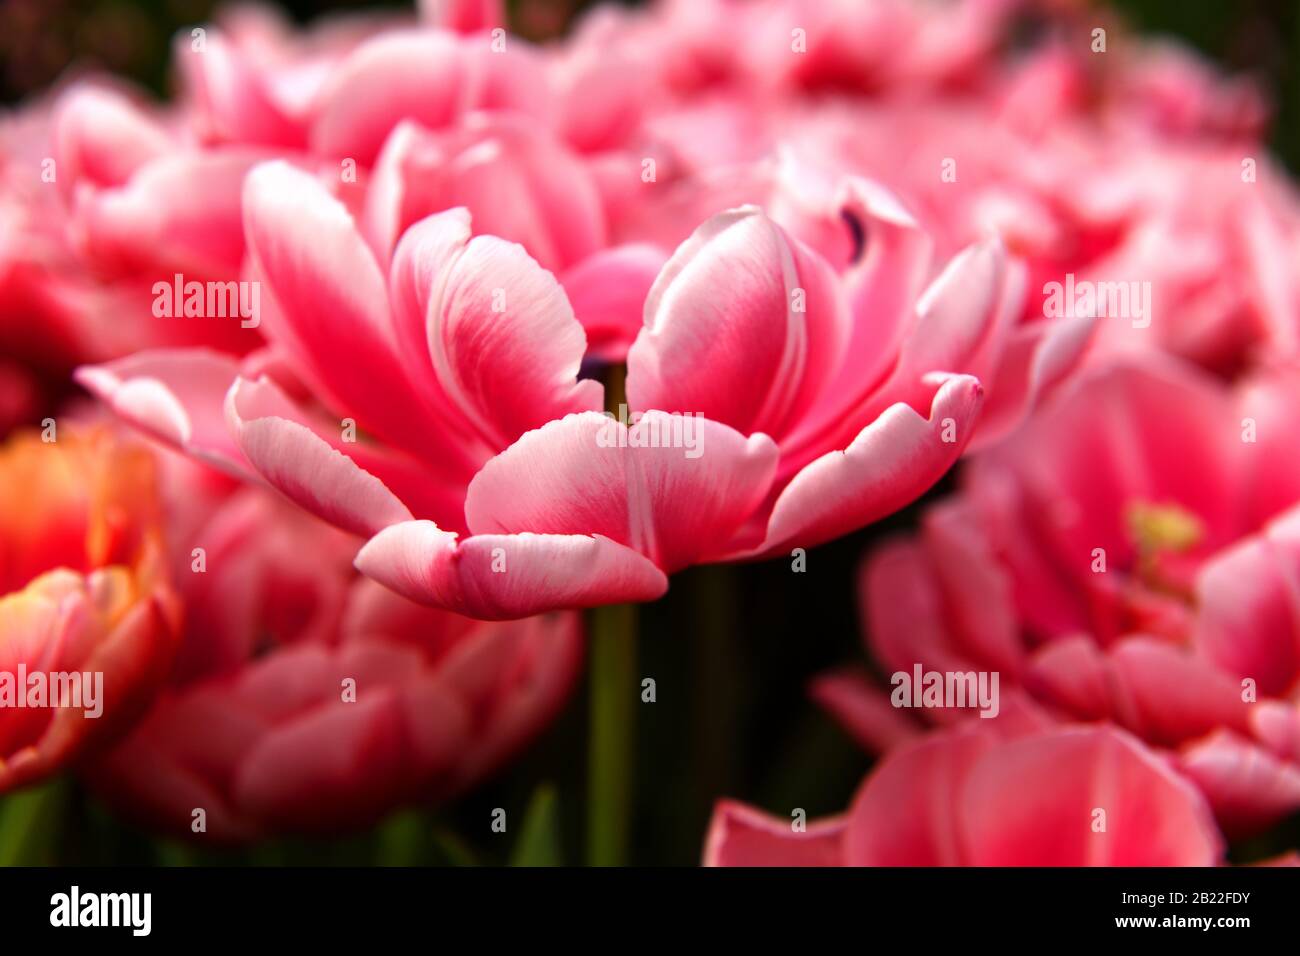 Famous peony tulip columbus, glowing reddish pink and has decorative white edge Stock Photo